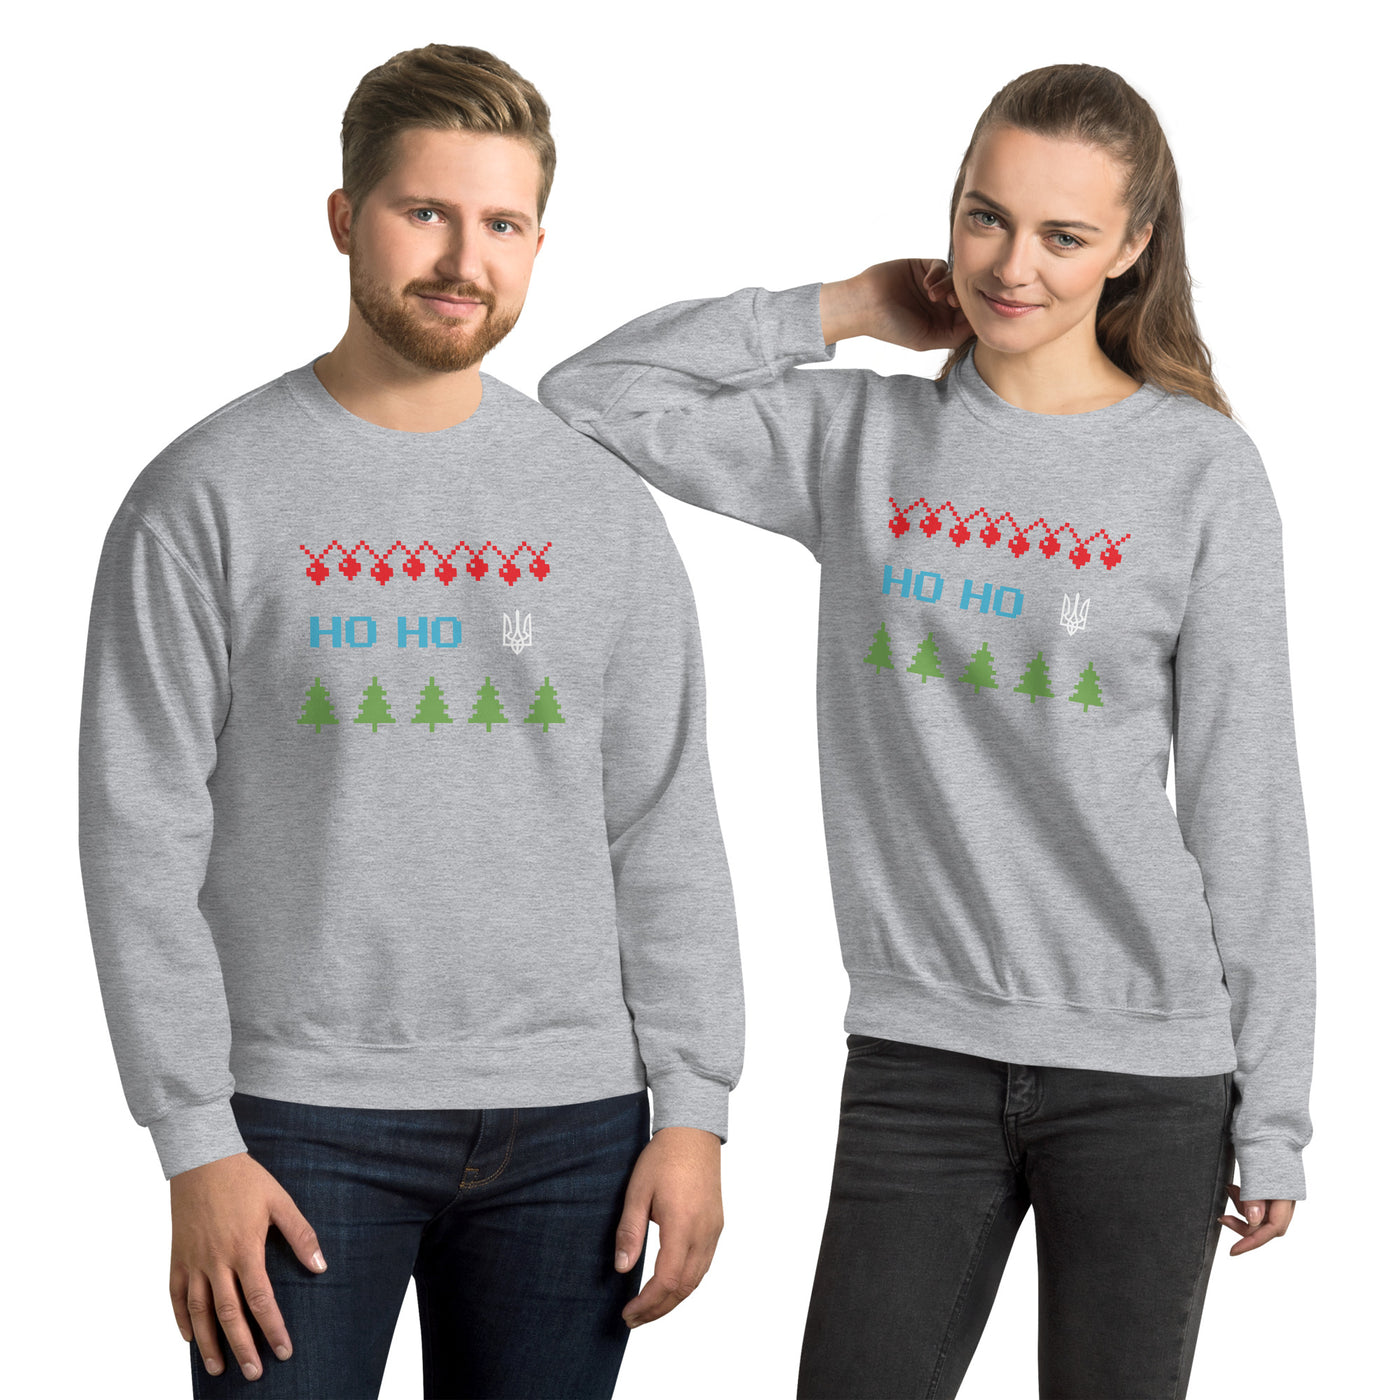 Merry Christmas  Sweatshirt Print